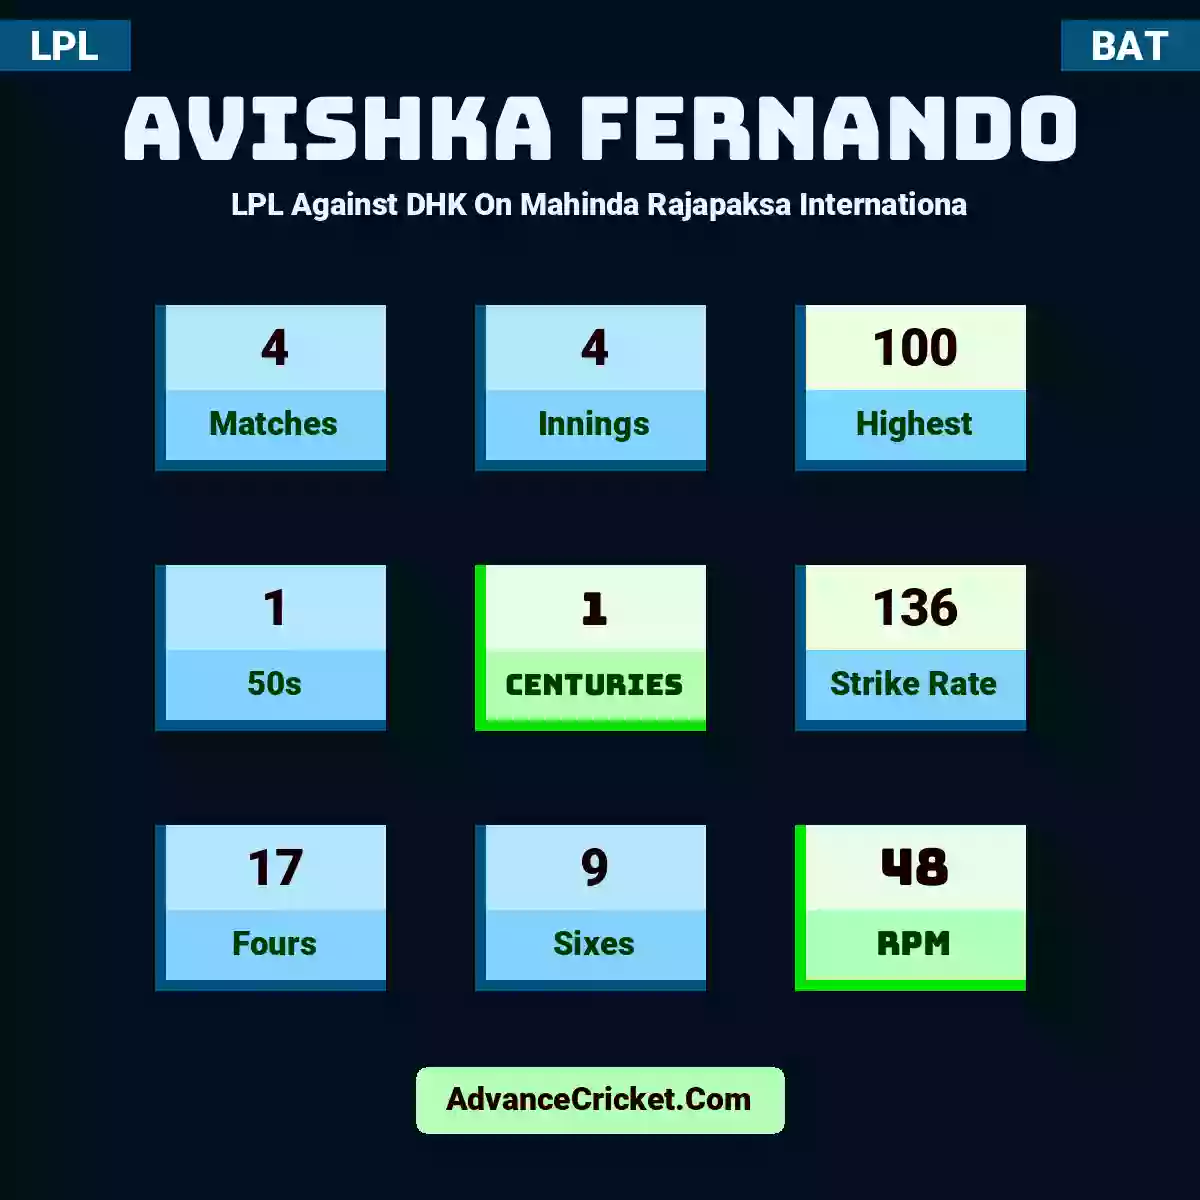 Avishka Fernando LPL  Against DHK On Mahinda Rajapaksa Internationa, Avishka Fernando played 4 matches, scored 100 runs as highest, 1 half-centuries, and 1 centuries, with a strike rate of 136. A.Fernando hit 17 fours and 9 sixes, with an RPM of 48.